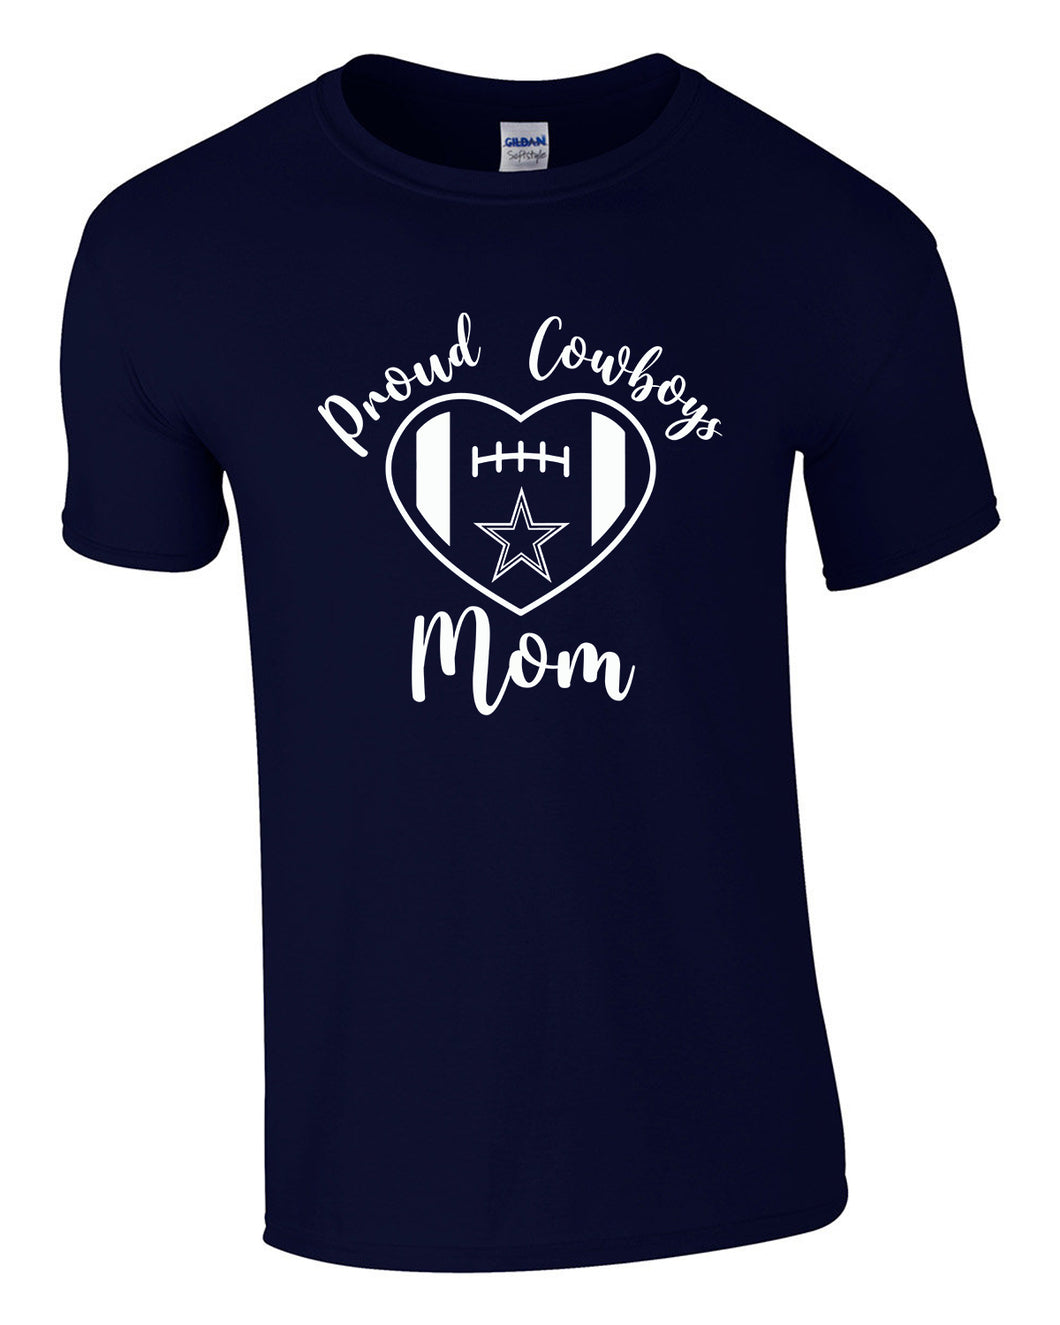 Proud Cowboys Mom - T-shirt - ADULT